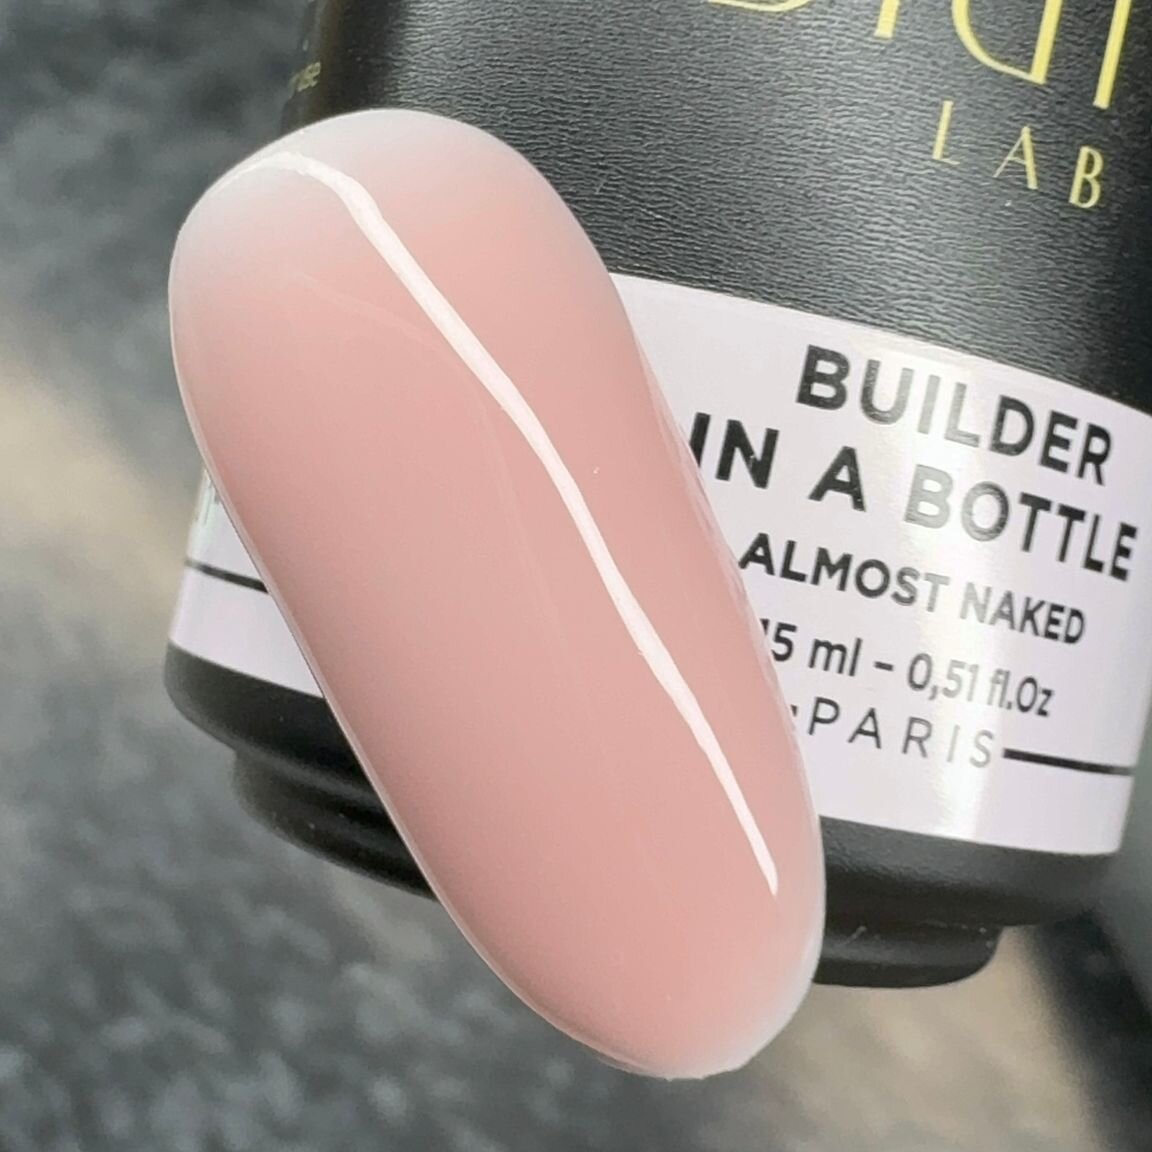 Builder Gel In a Bottle Didier Lab Almost Naked 15ml